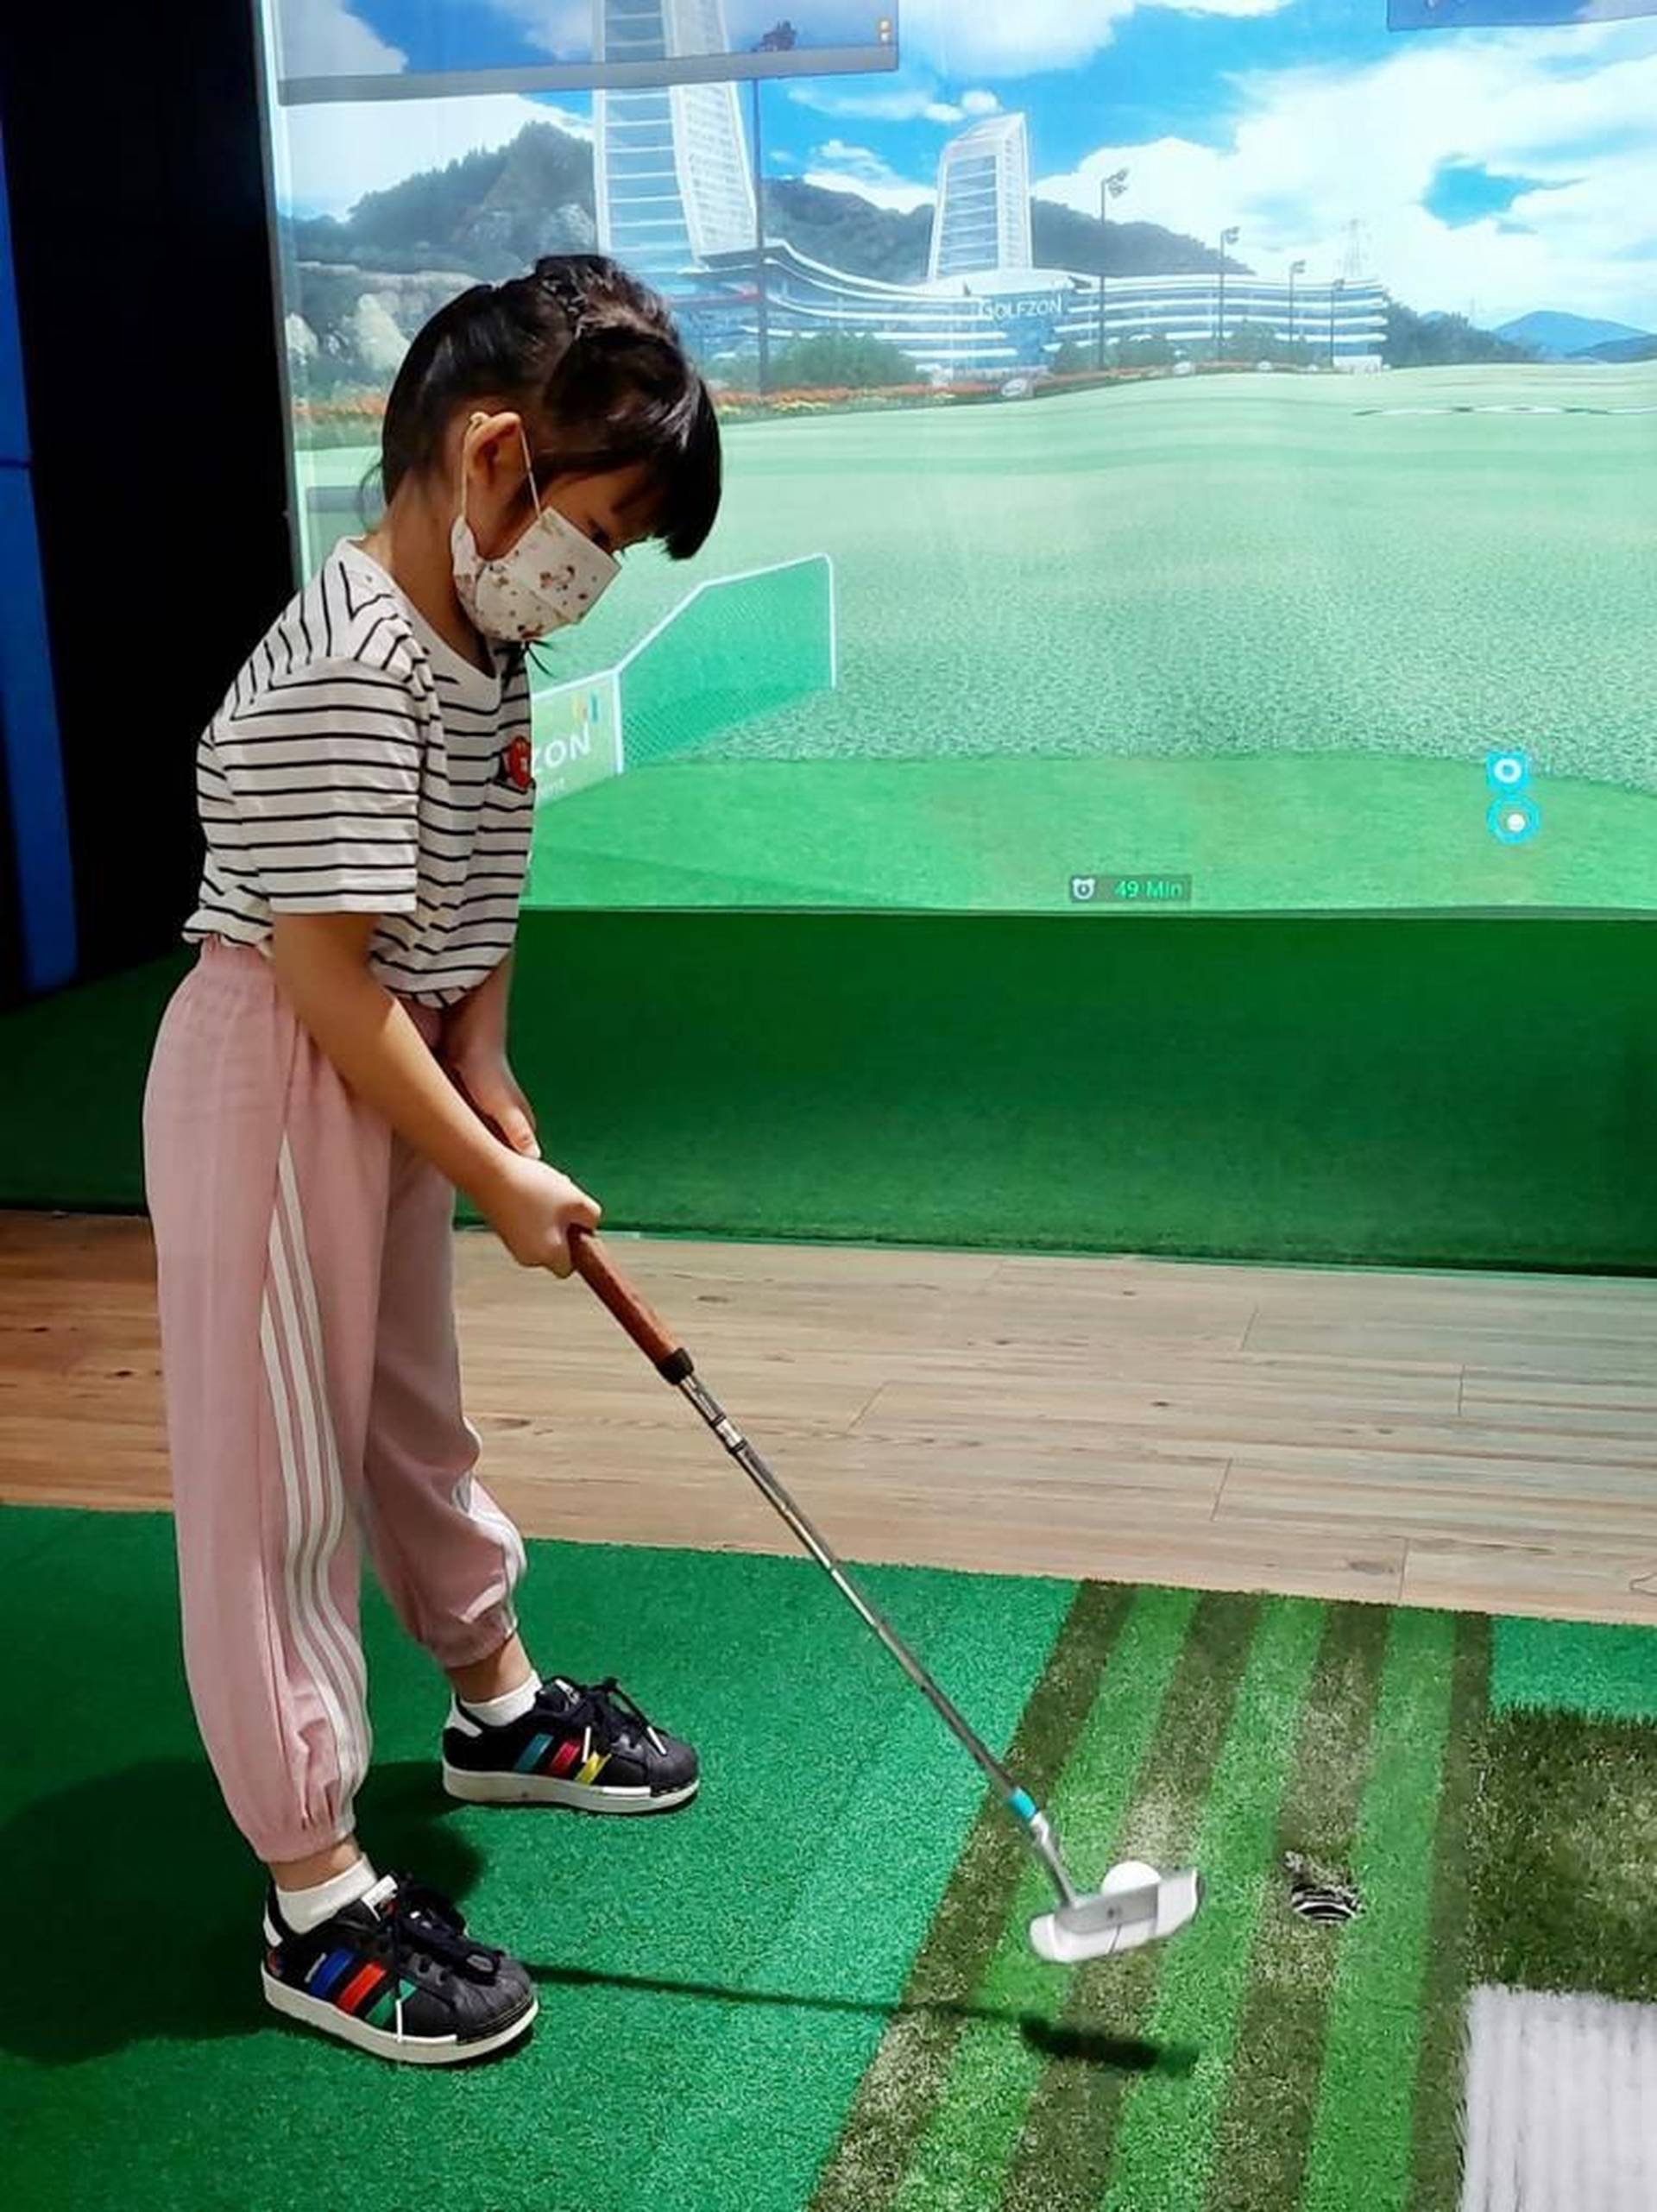 XMAS NIKE Golf Camp聖誕Nike高爾夫球營 2022 (8-10歲)